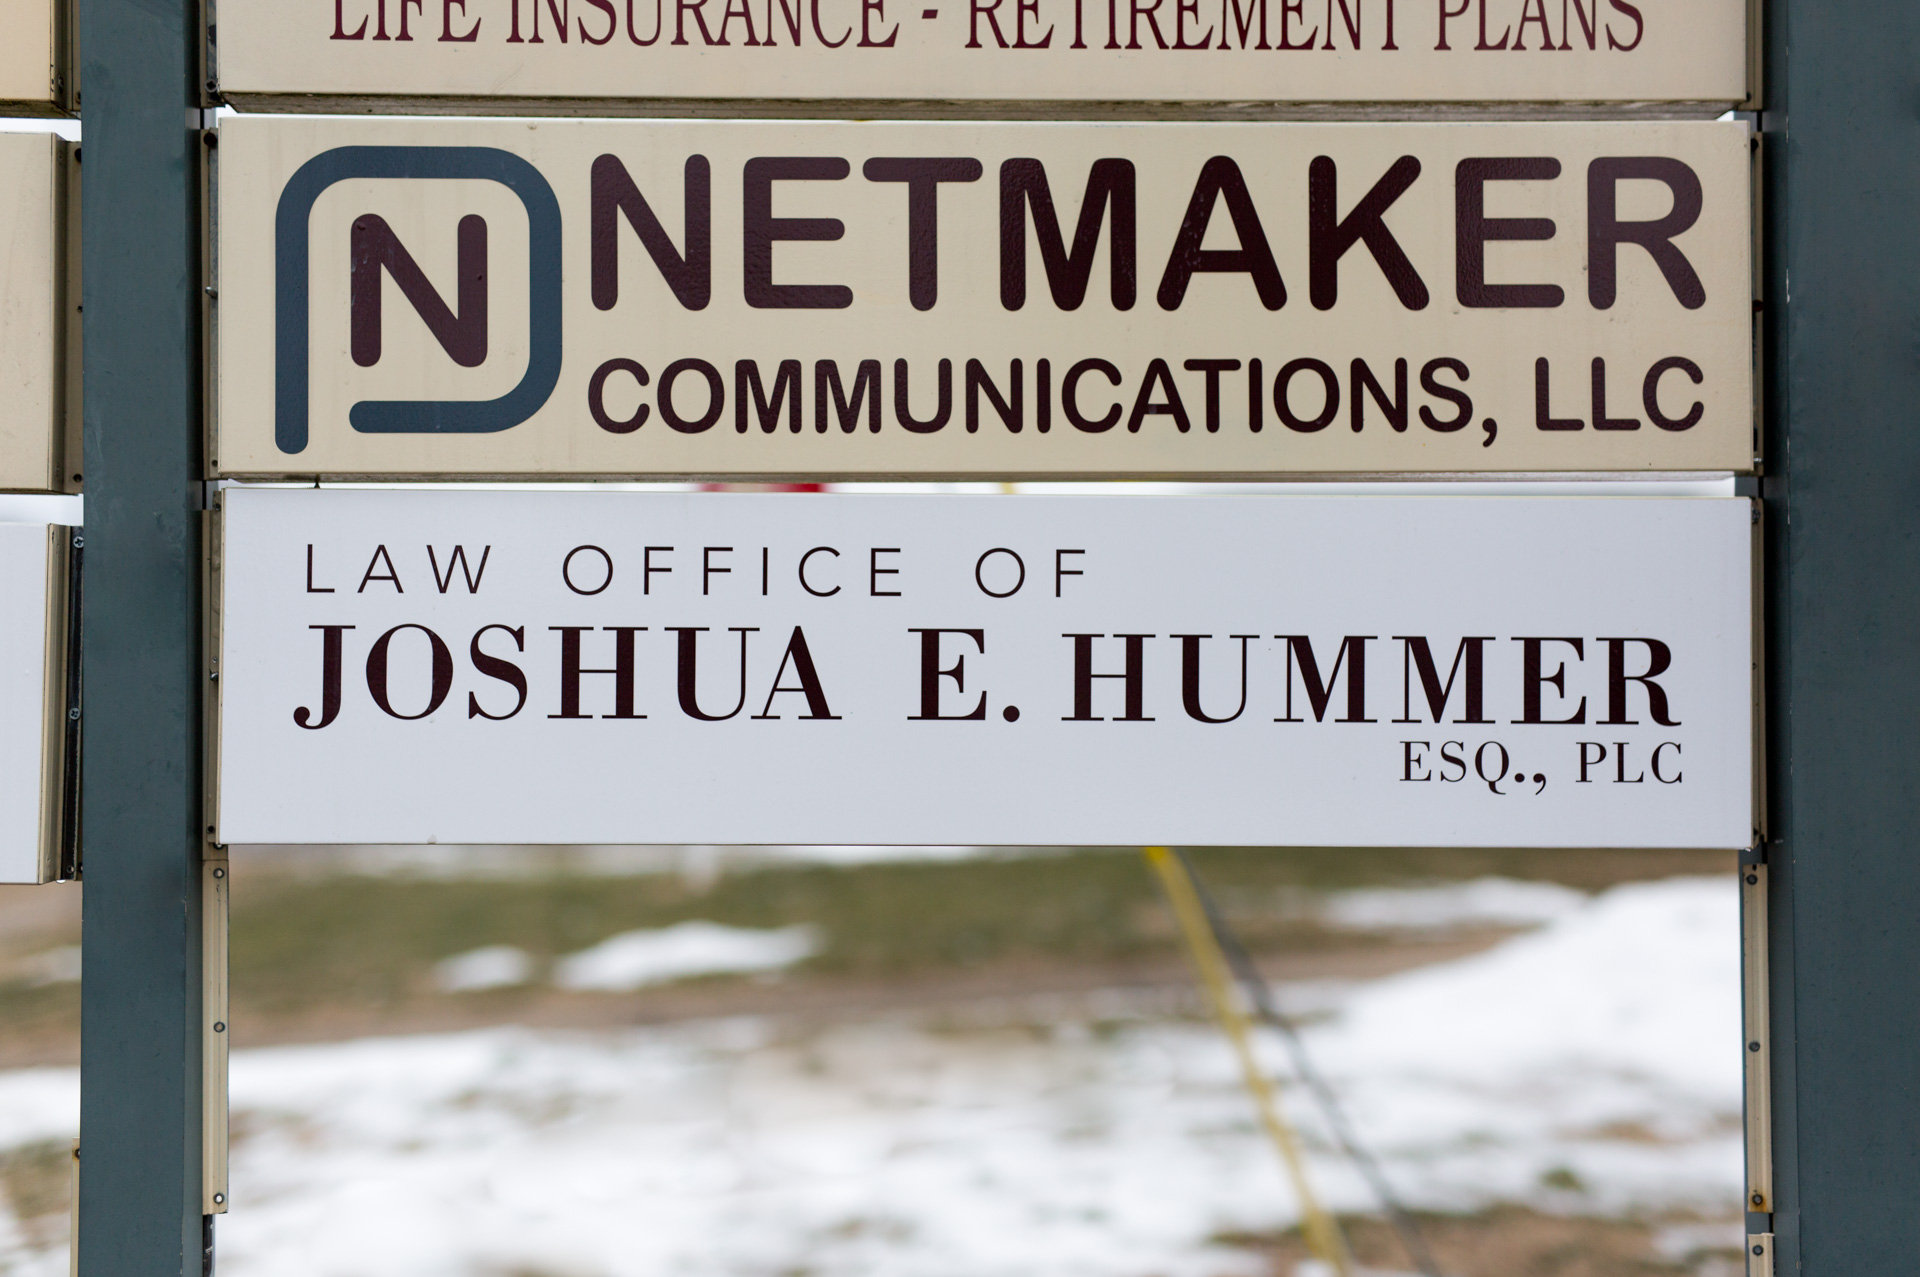 Joshua E. Hummer, ESQ.